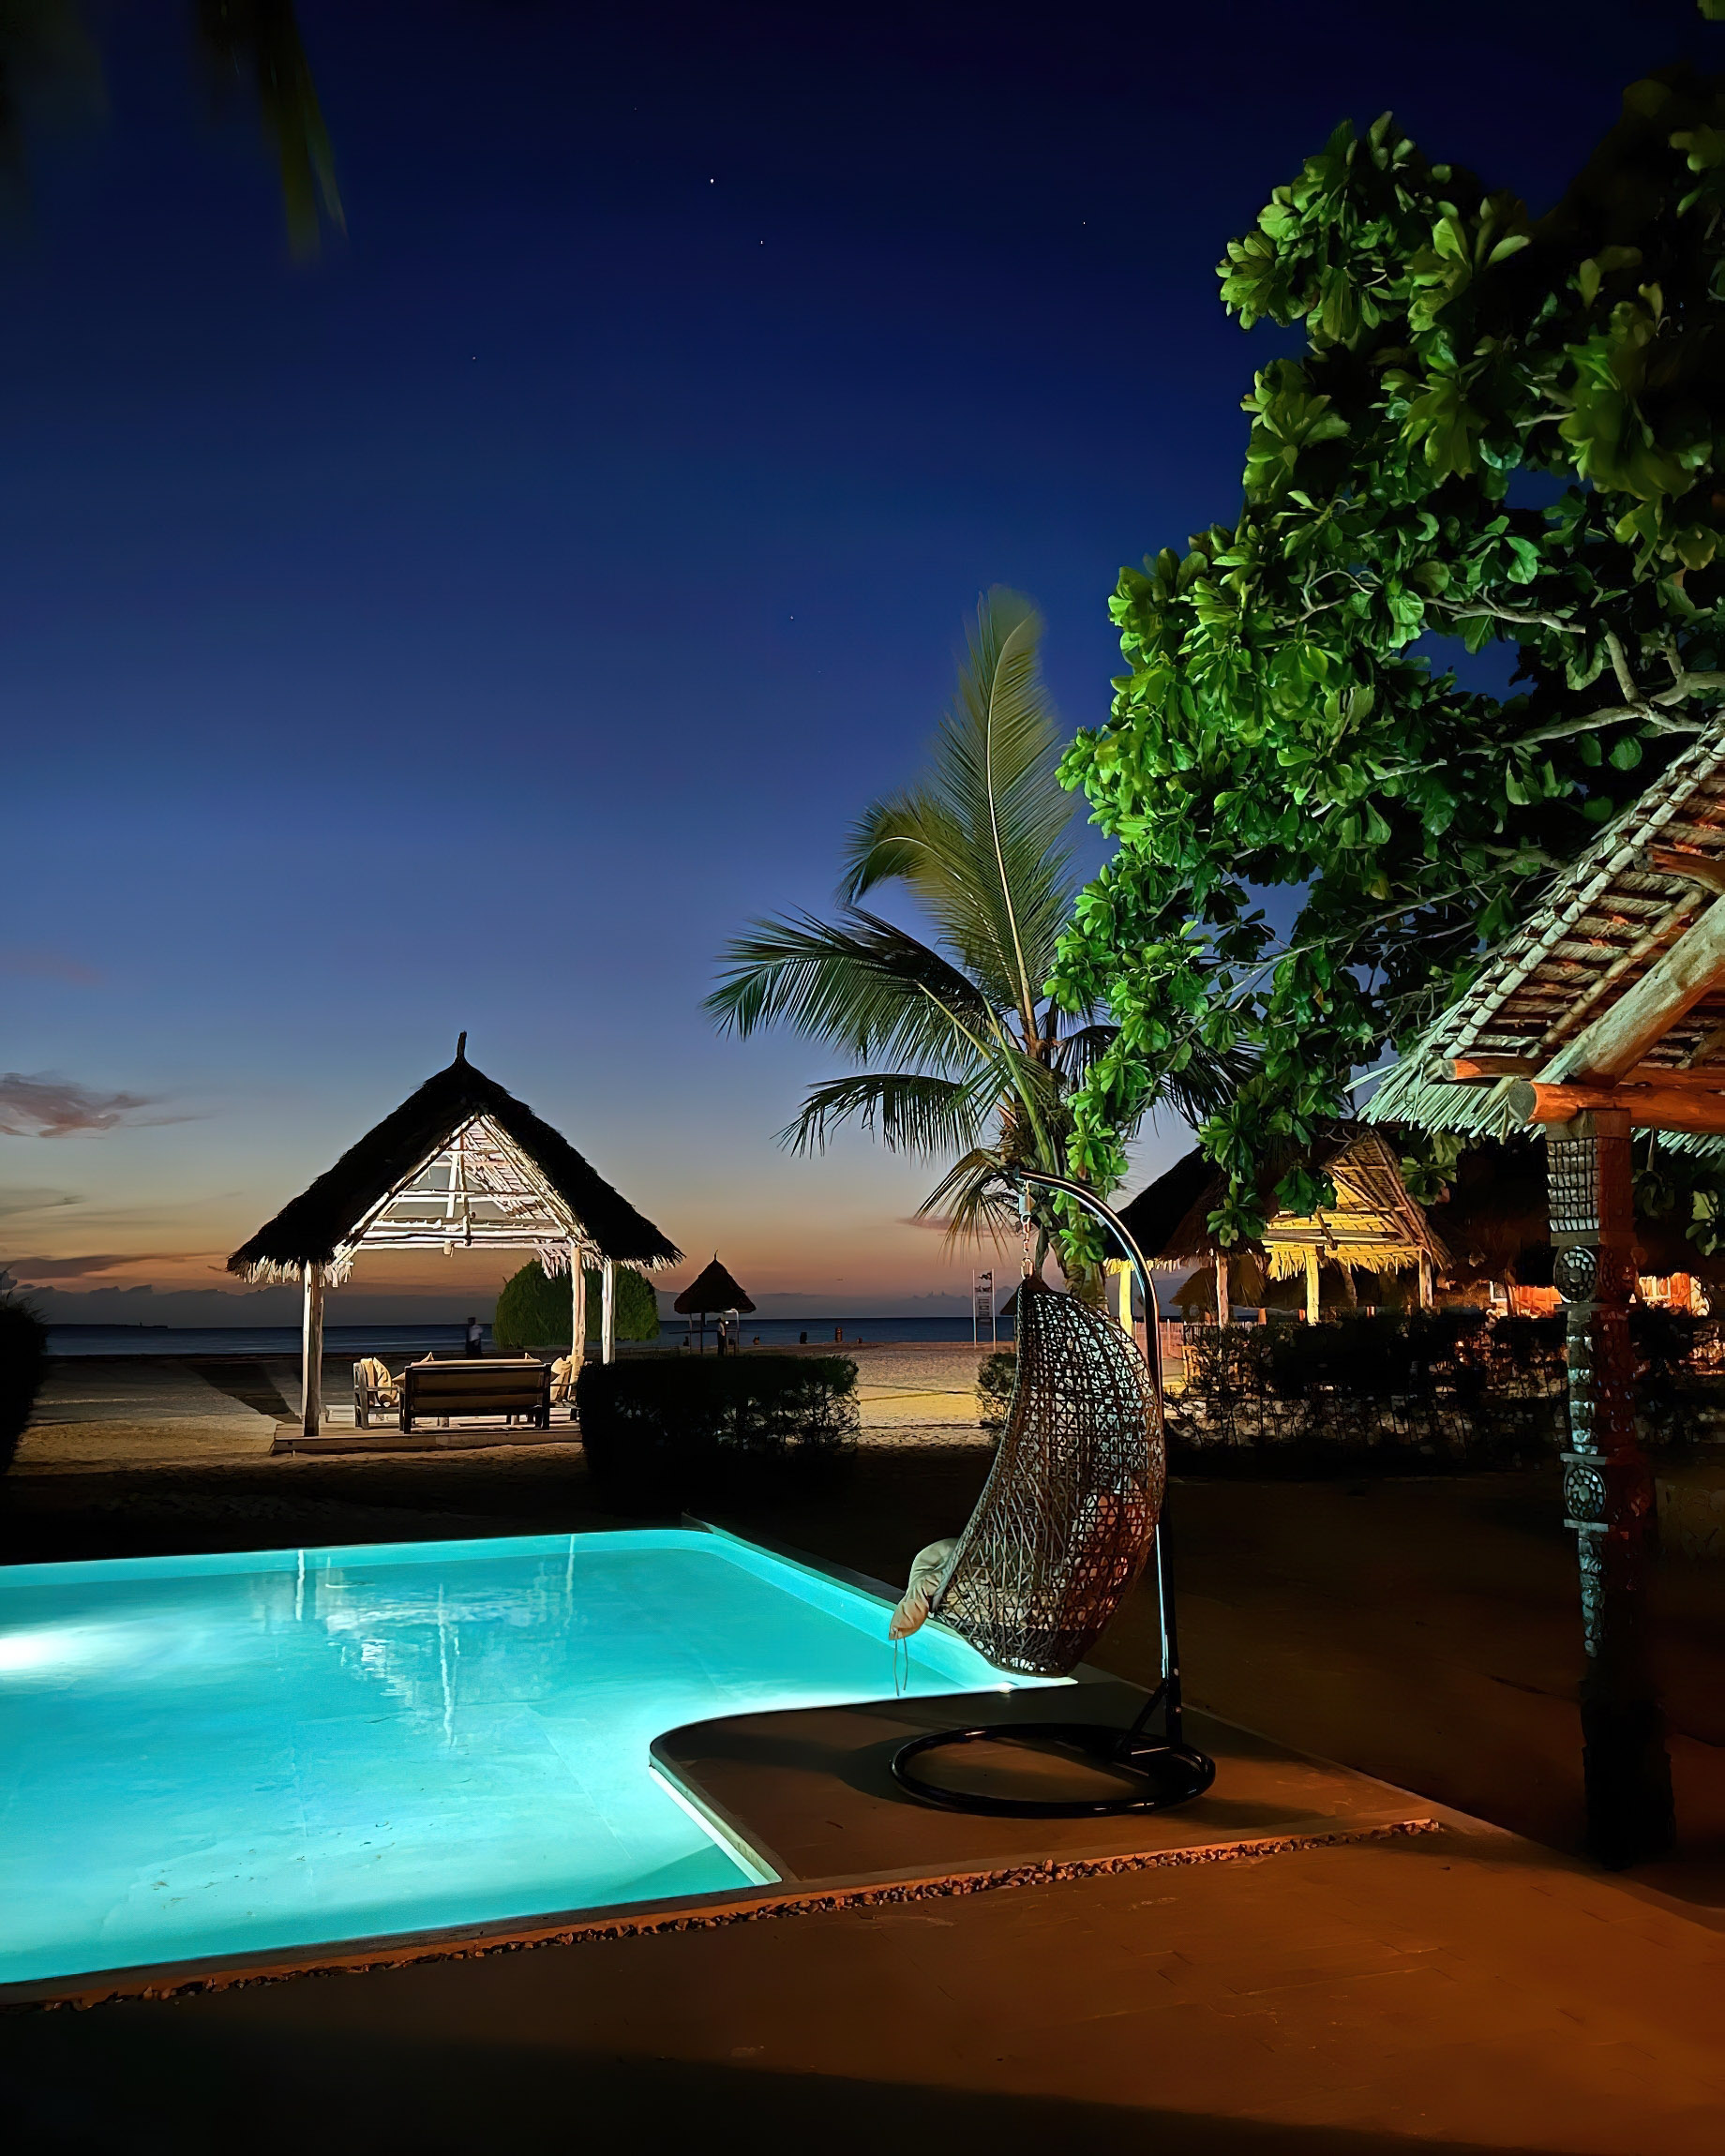 Gold Zanzibar Beach House & Spa Resort – Nungwi, Zanzibar, Tanzania – Resort Pool Night View